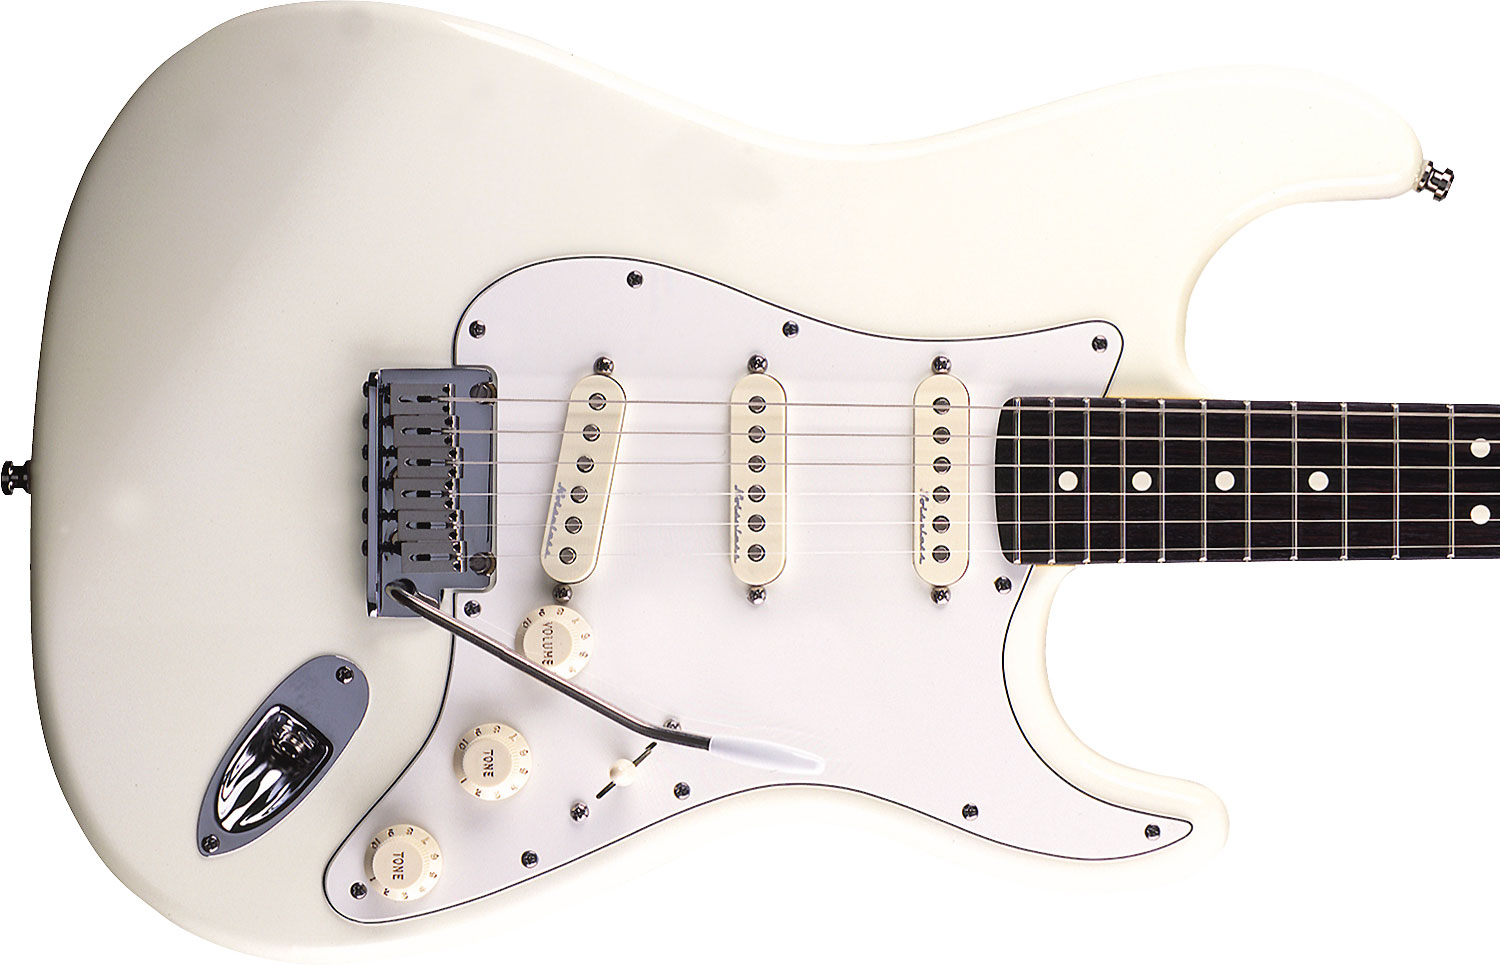 Fender Jeff Beck Strat Usa Signature 3s Trem Rw - Olympic White - Str shape electric guitar - Variation 2